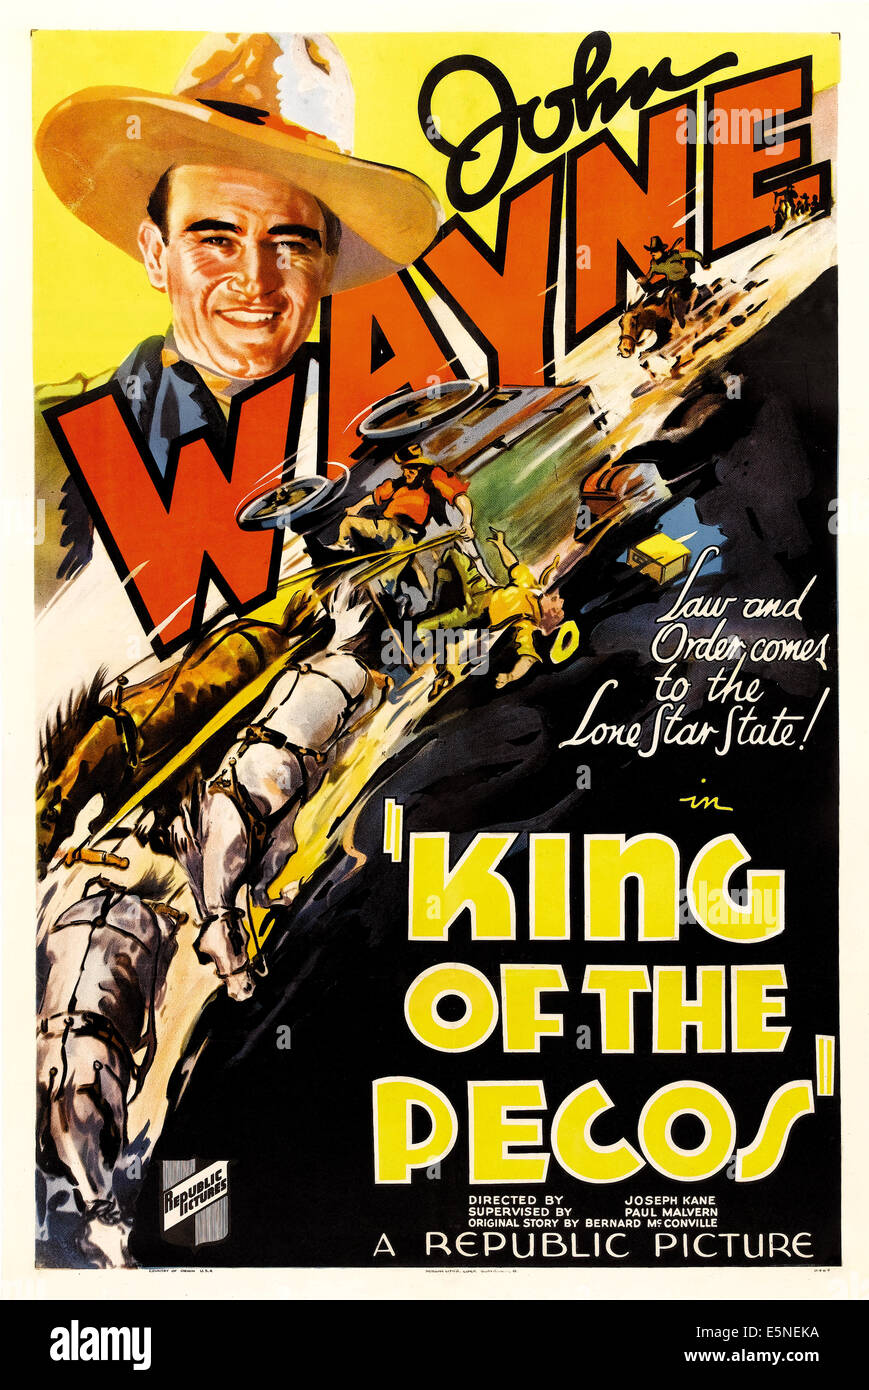 Il re dei Pecos, John Wayne, 1936 Foto stock - Alamy